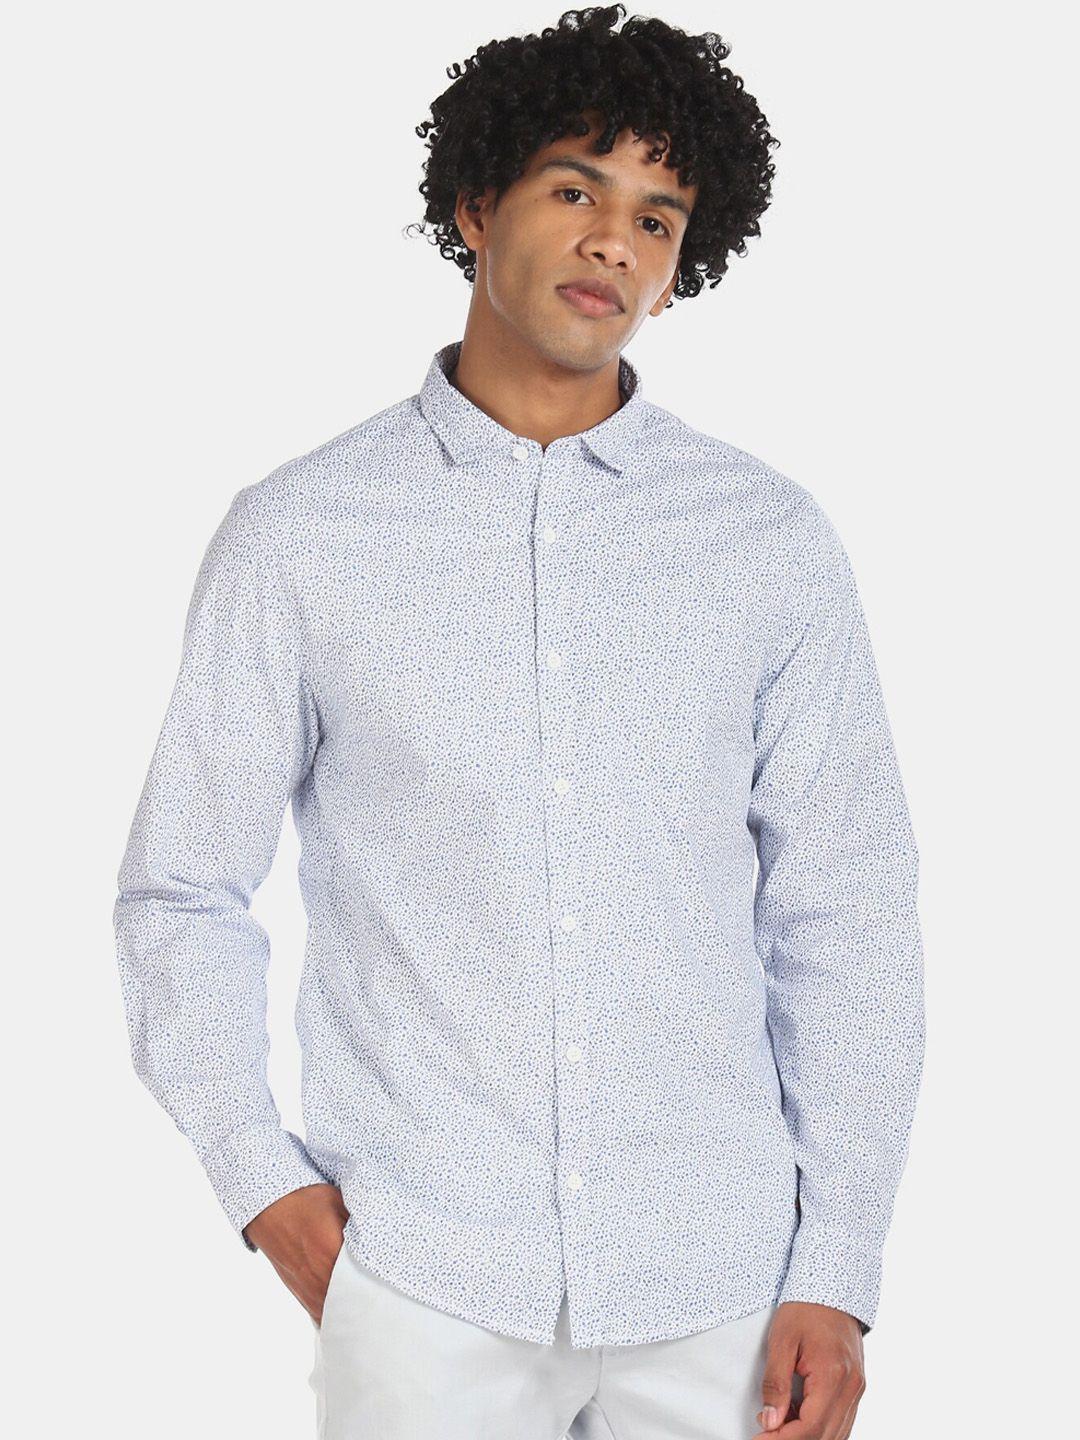 cherokee-men-white-&-blue-regular-fit-printed-casual-shirt